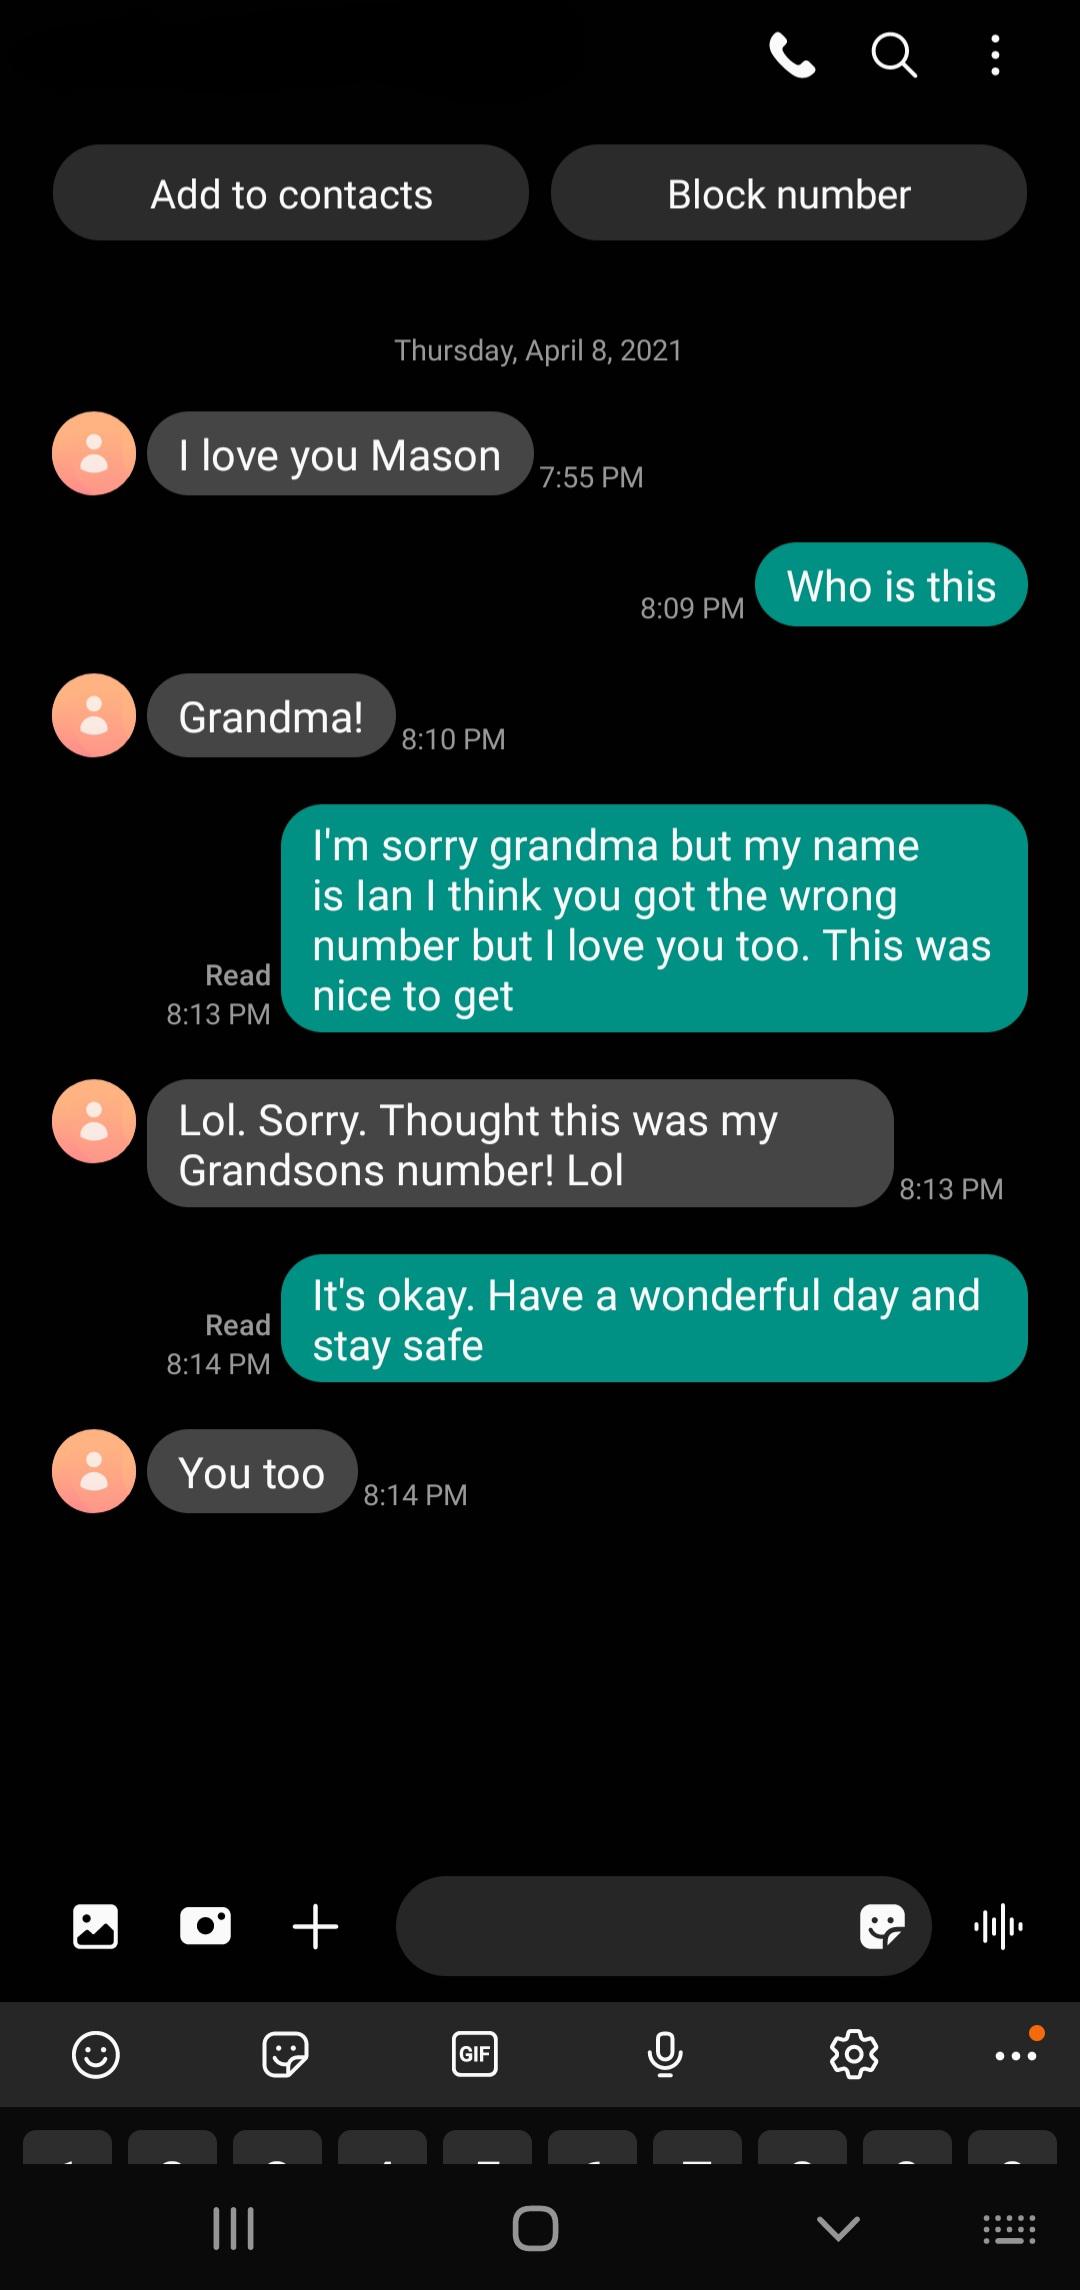 (love you too, gran)